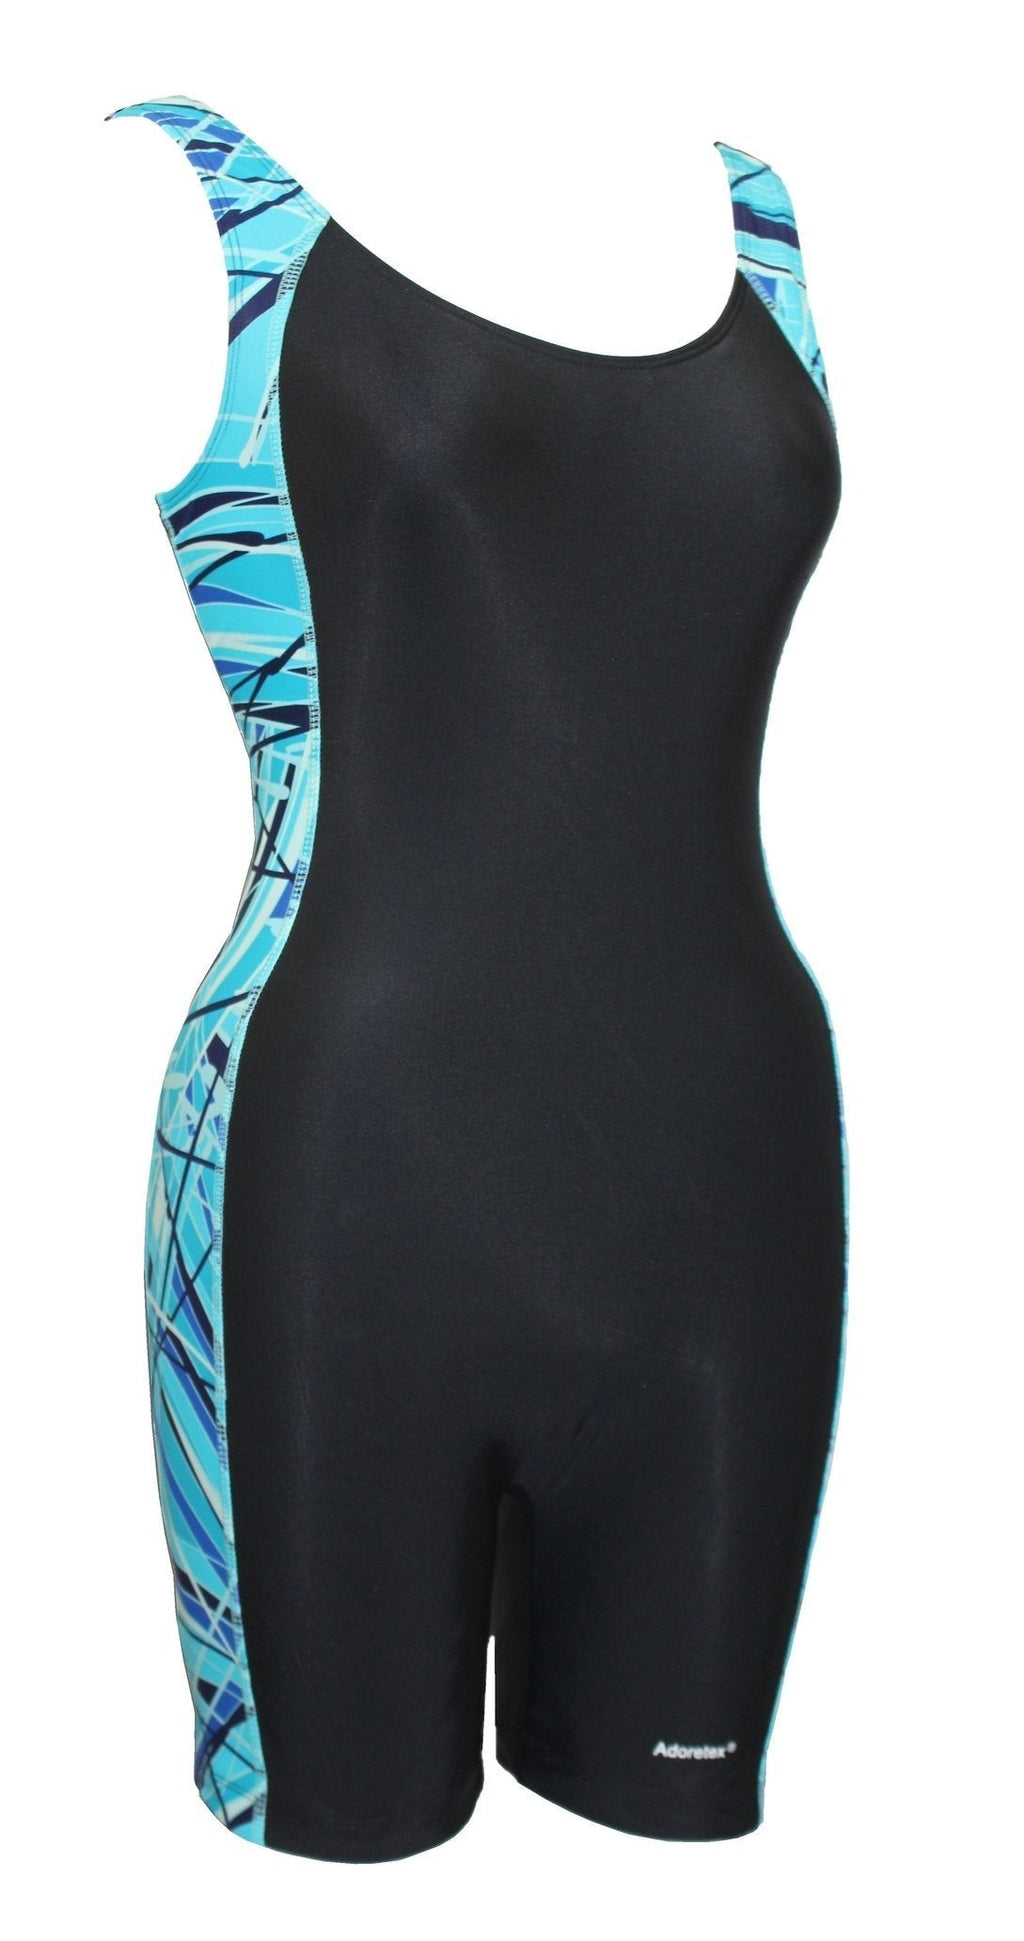 [AUSTRALIA] - Adoretex Women's New Direction Piping Unitard Swimsuit(FU006) - Black/Teal - Small 